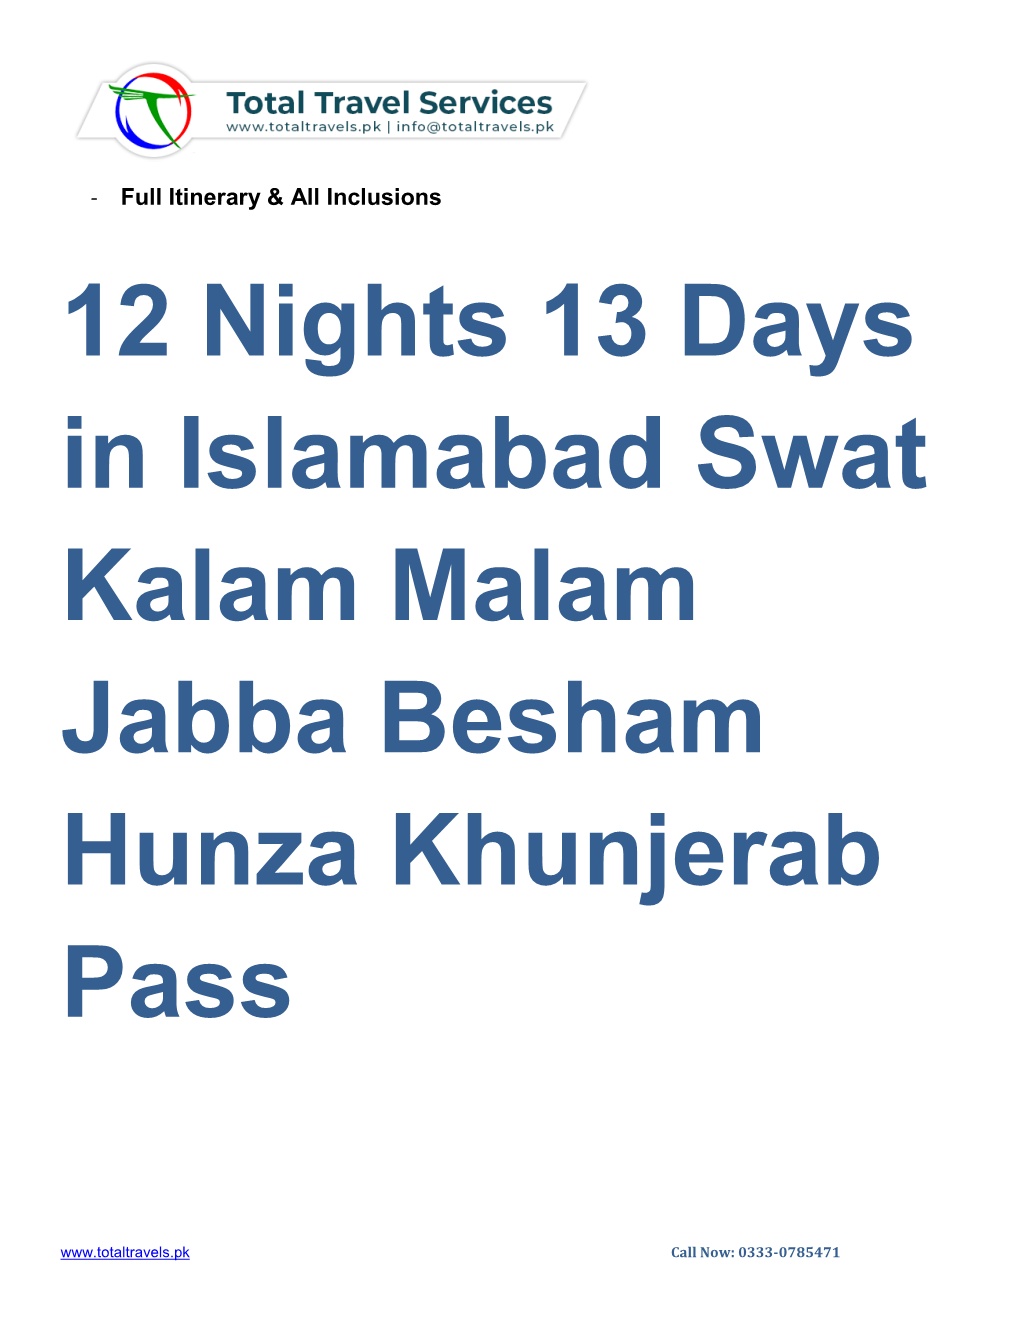 12 Nights 13 Days in Islamabad Swat Kalam Malam Jabba Besham Hunza Khunjerab Pass